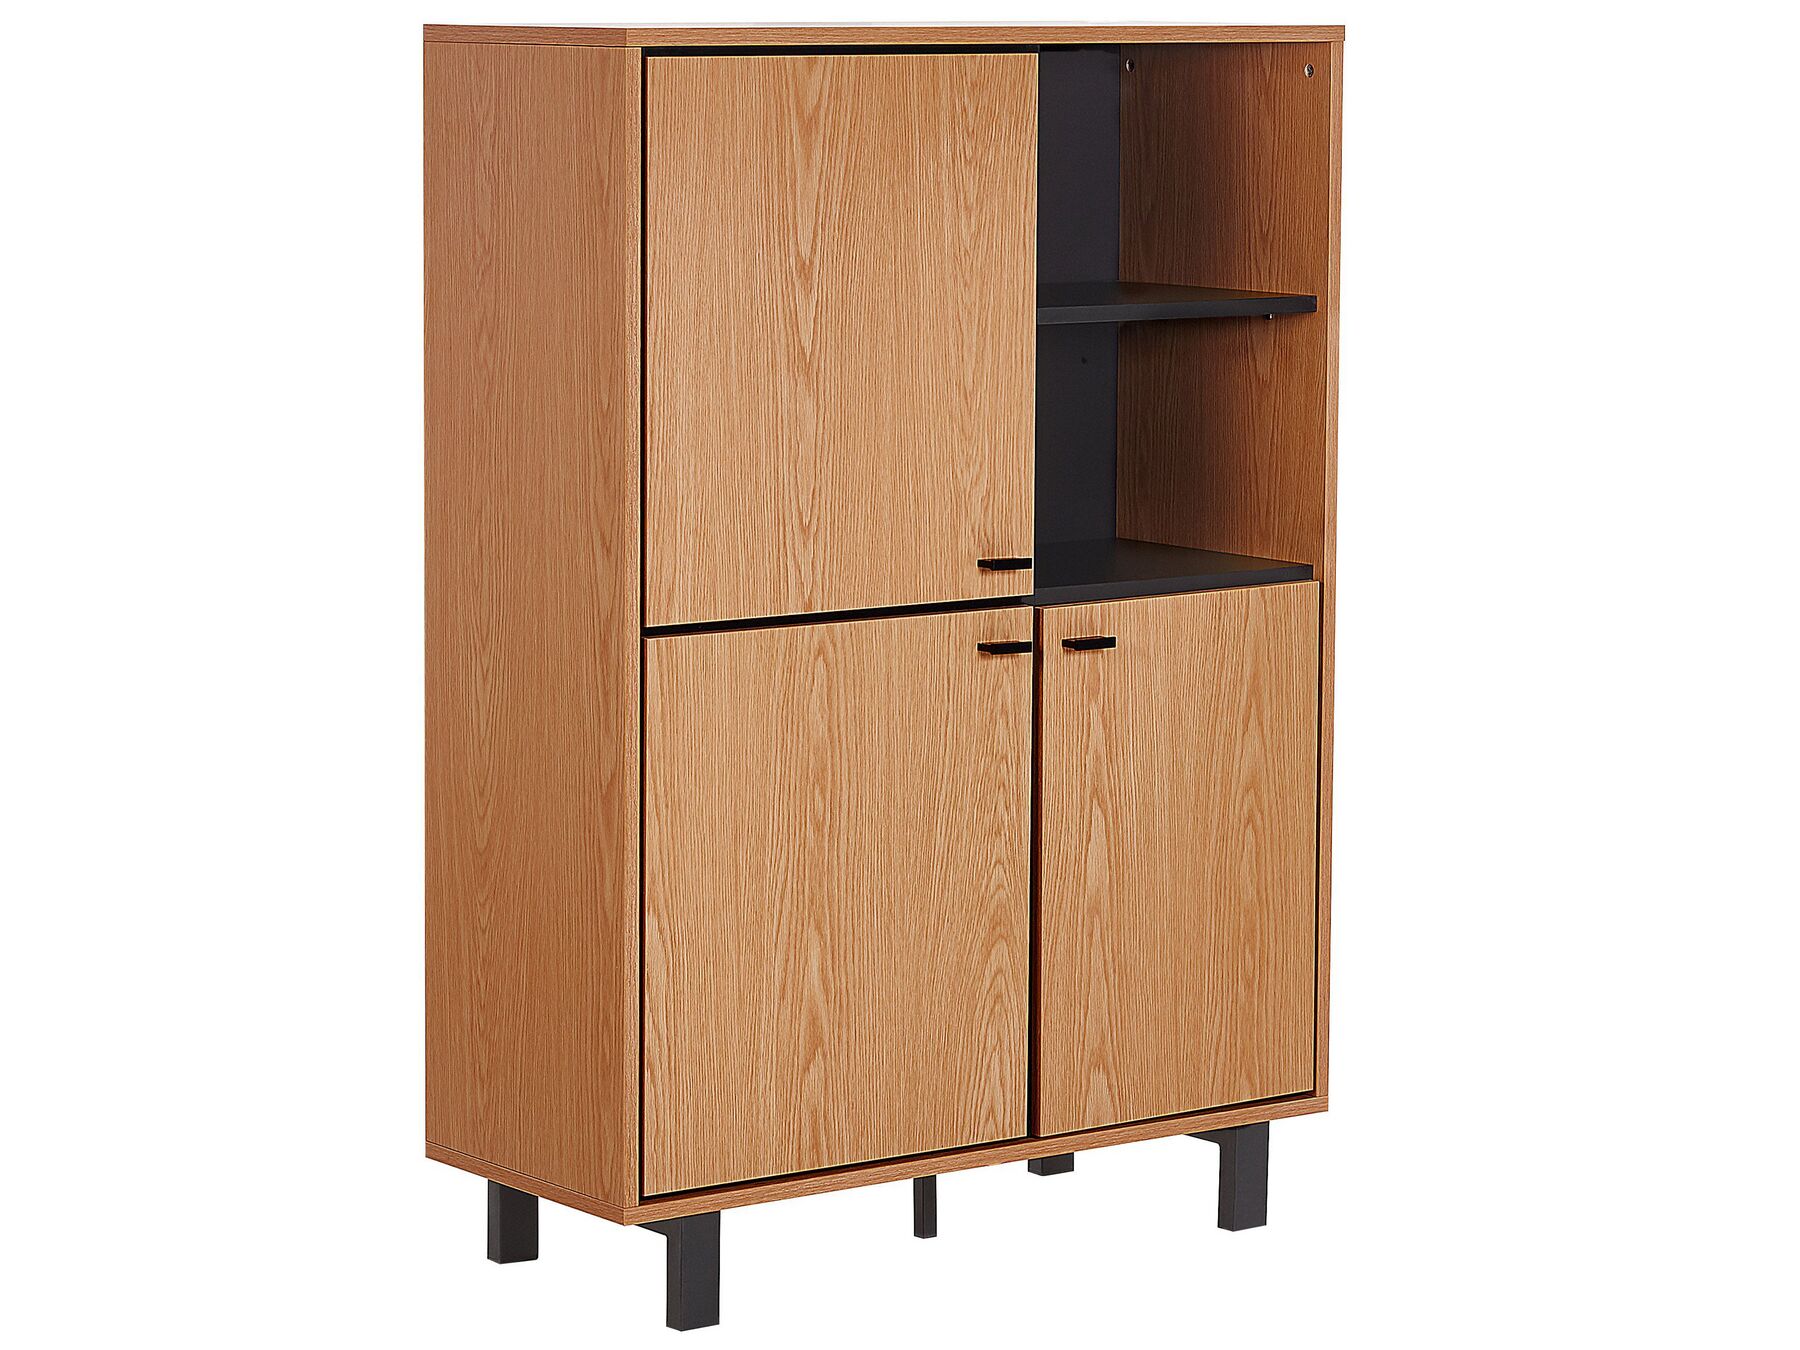 Retro Sideboard 3 Cabinets 2 Shelves Oak Finish Light Wood with Black Paramount